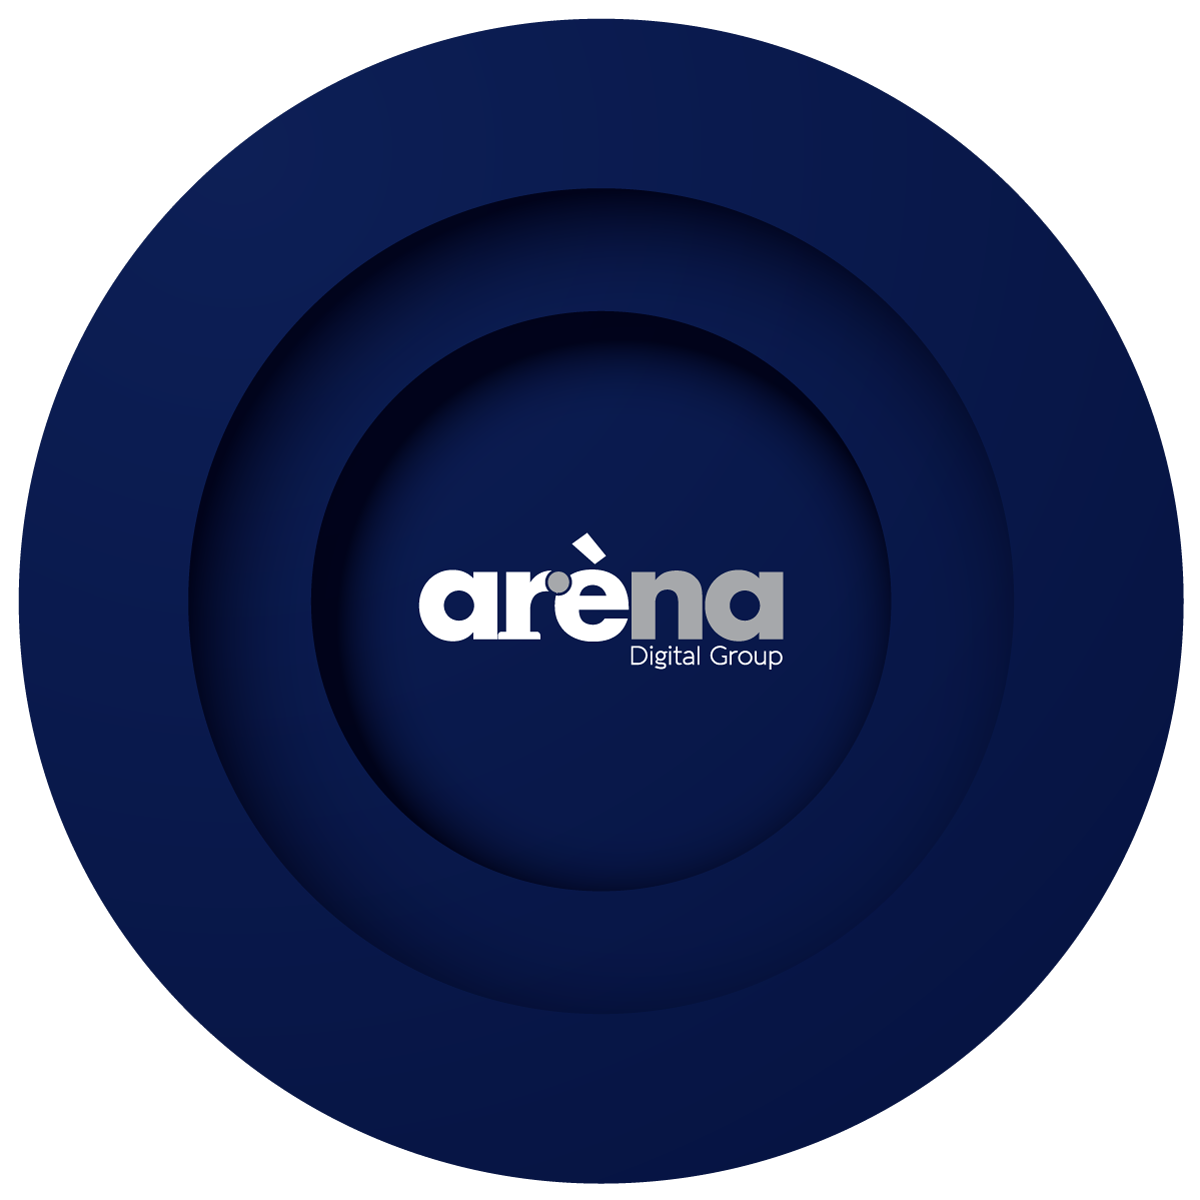 Arena Digital Group